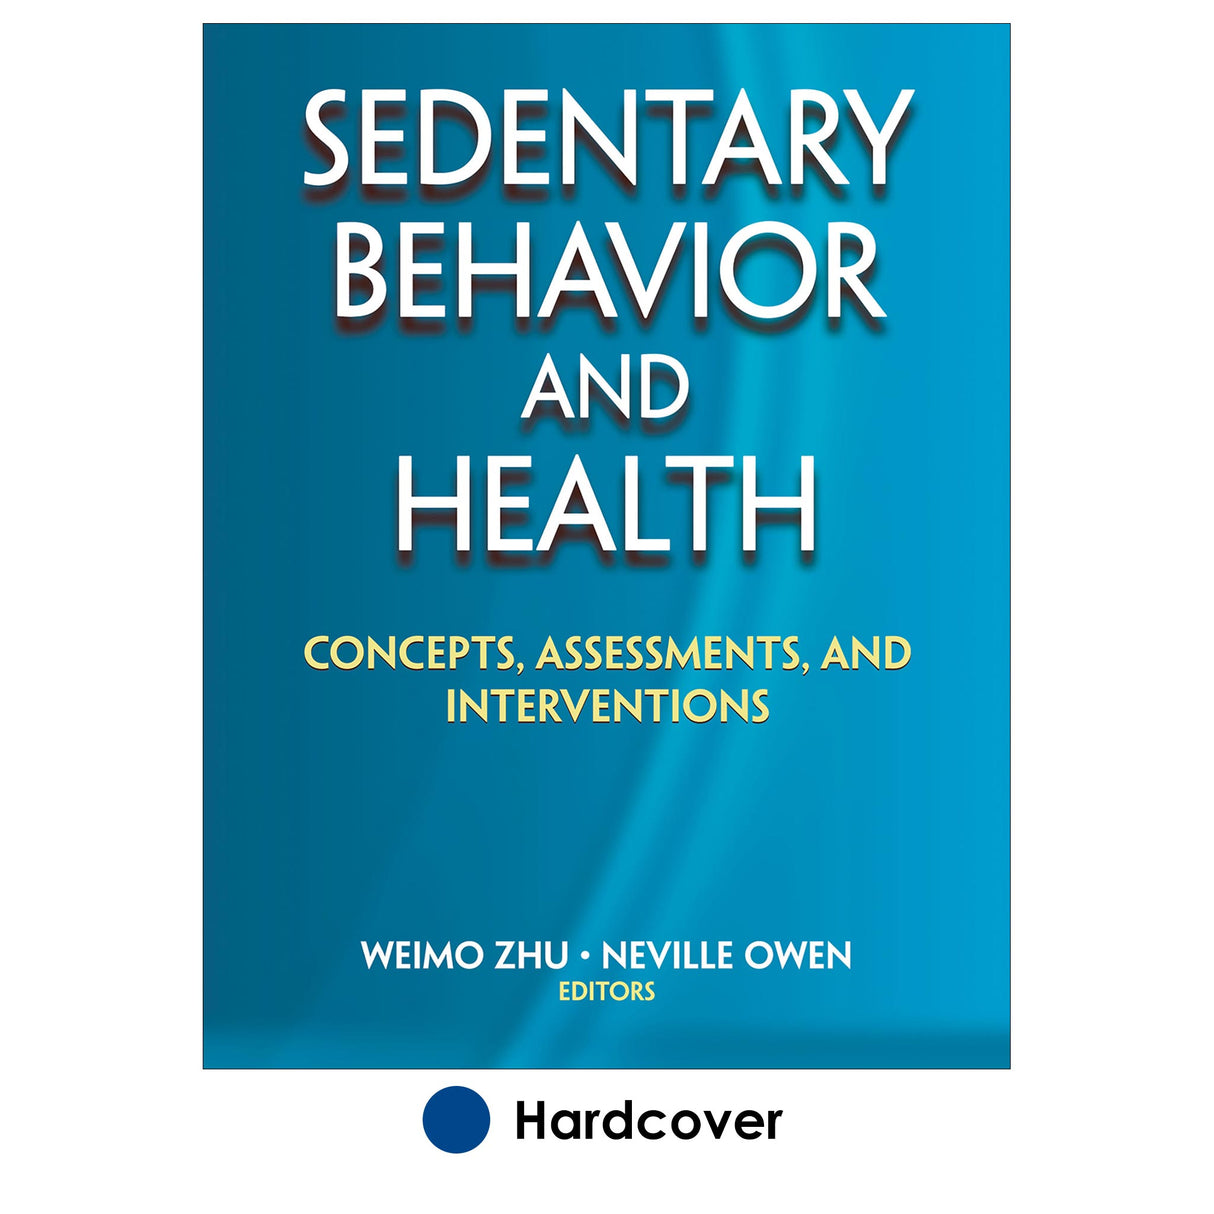 Sedentary Behavior and Health